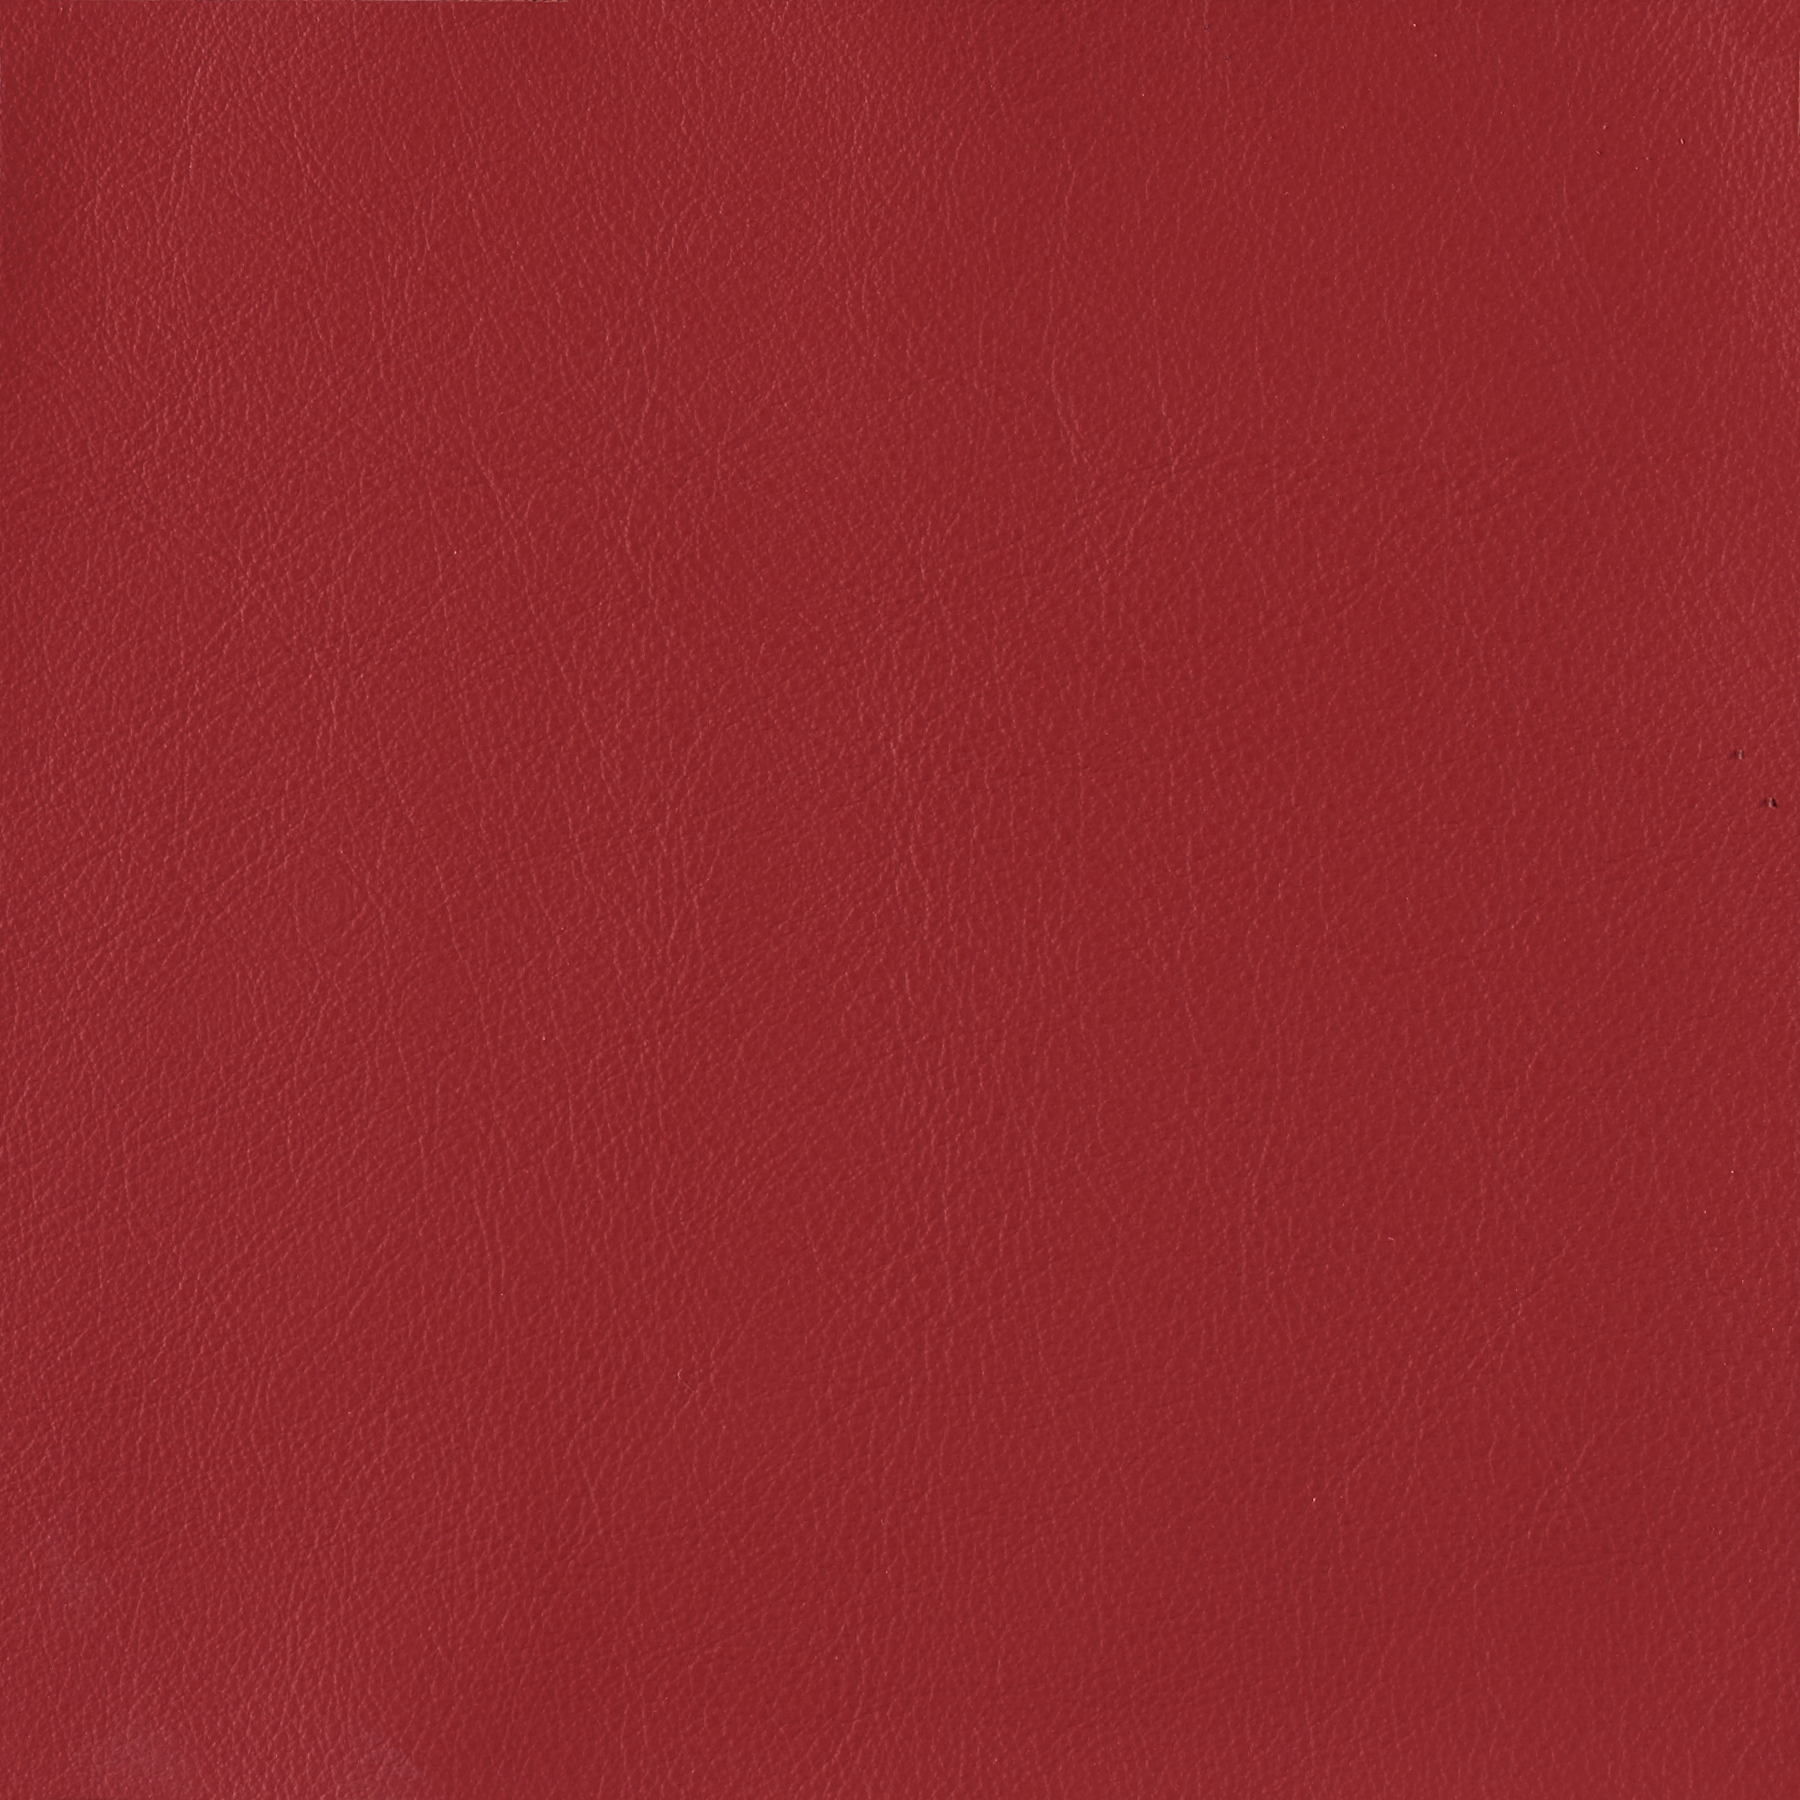 Swiss Red, 5-604